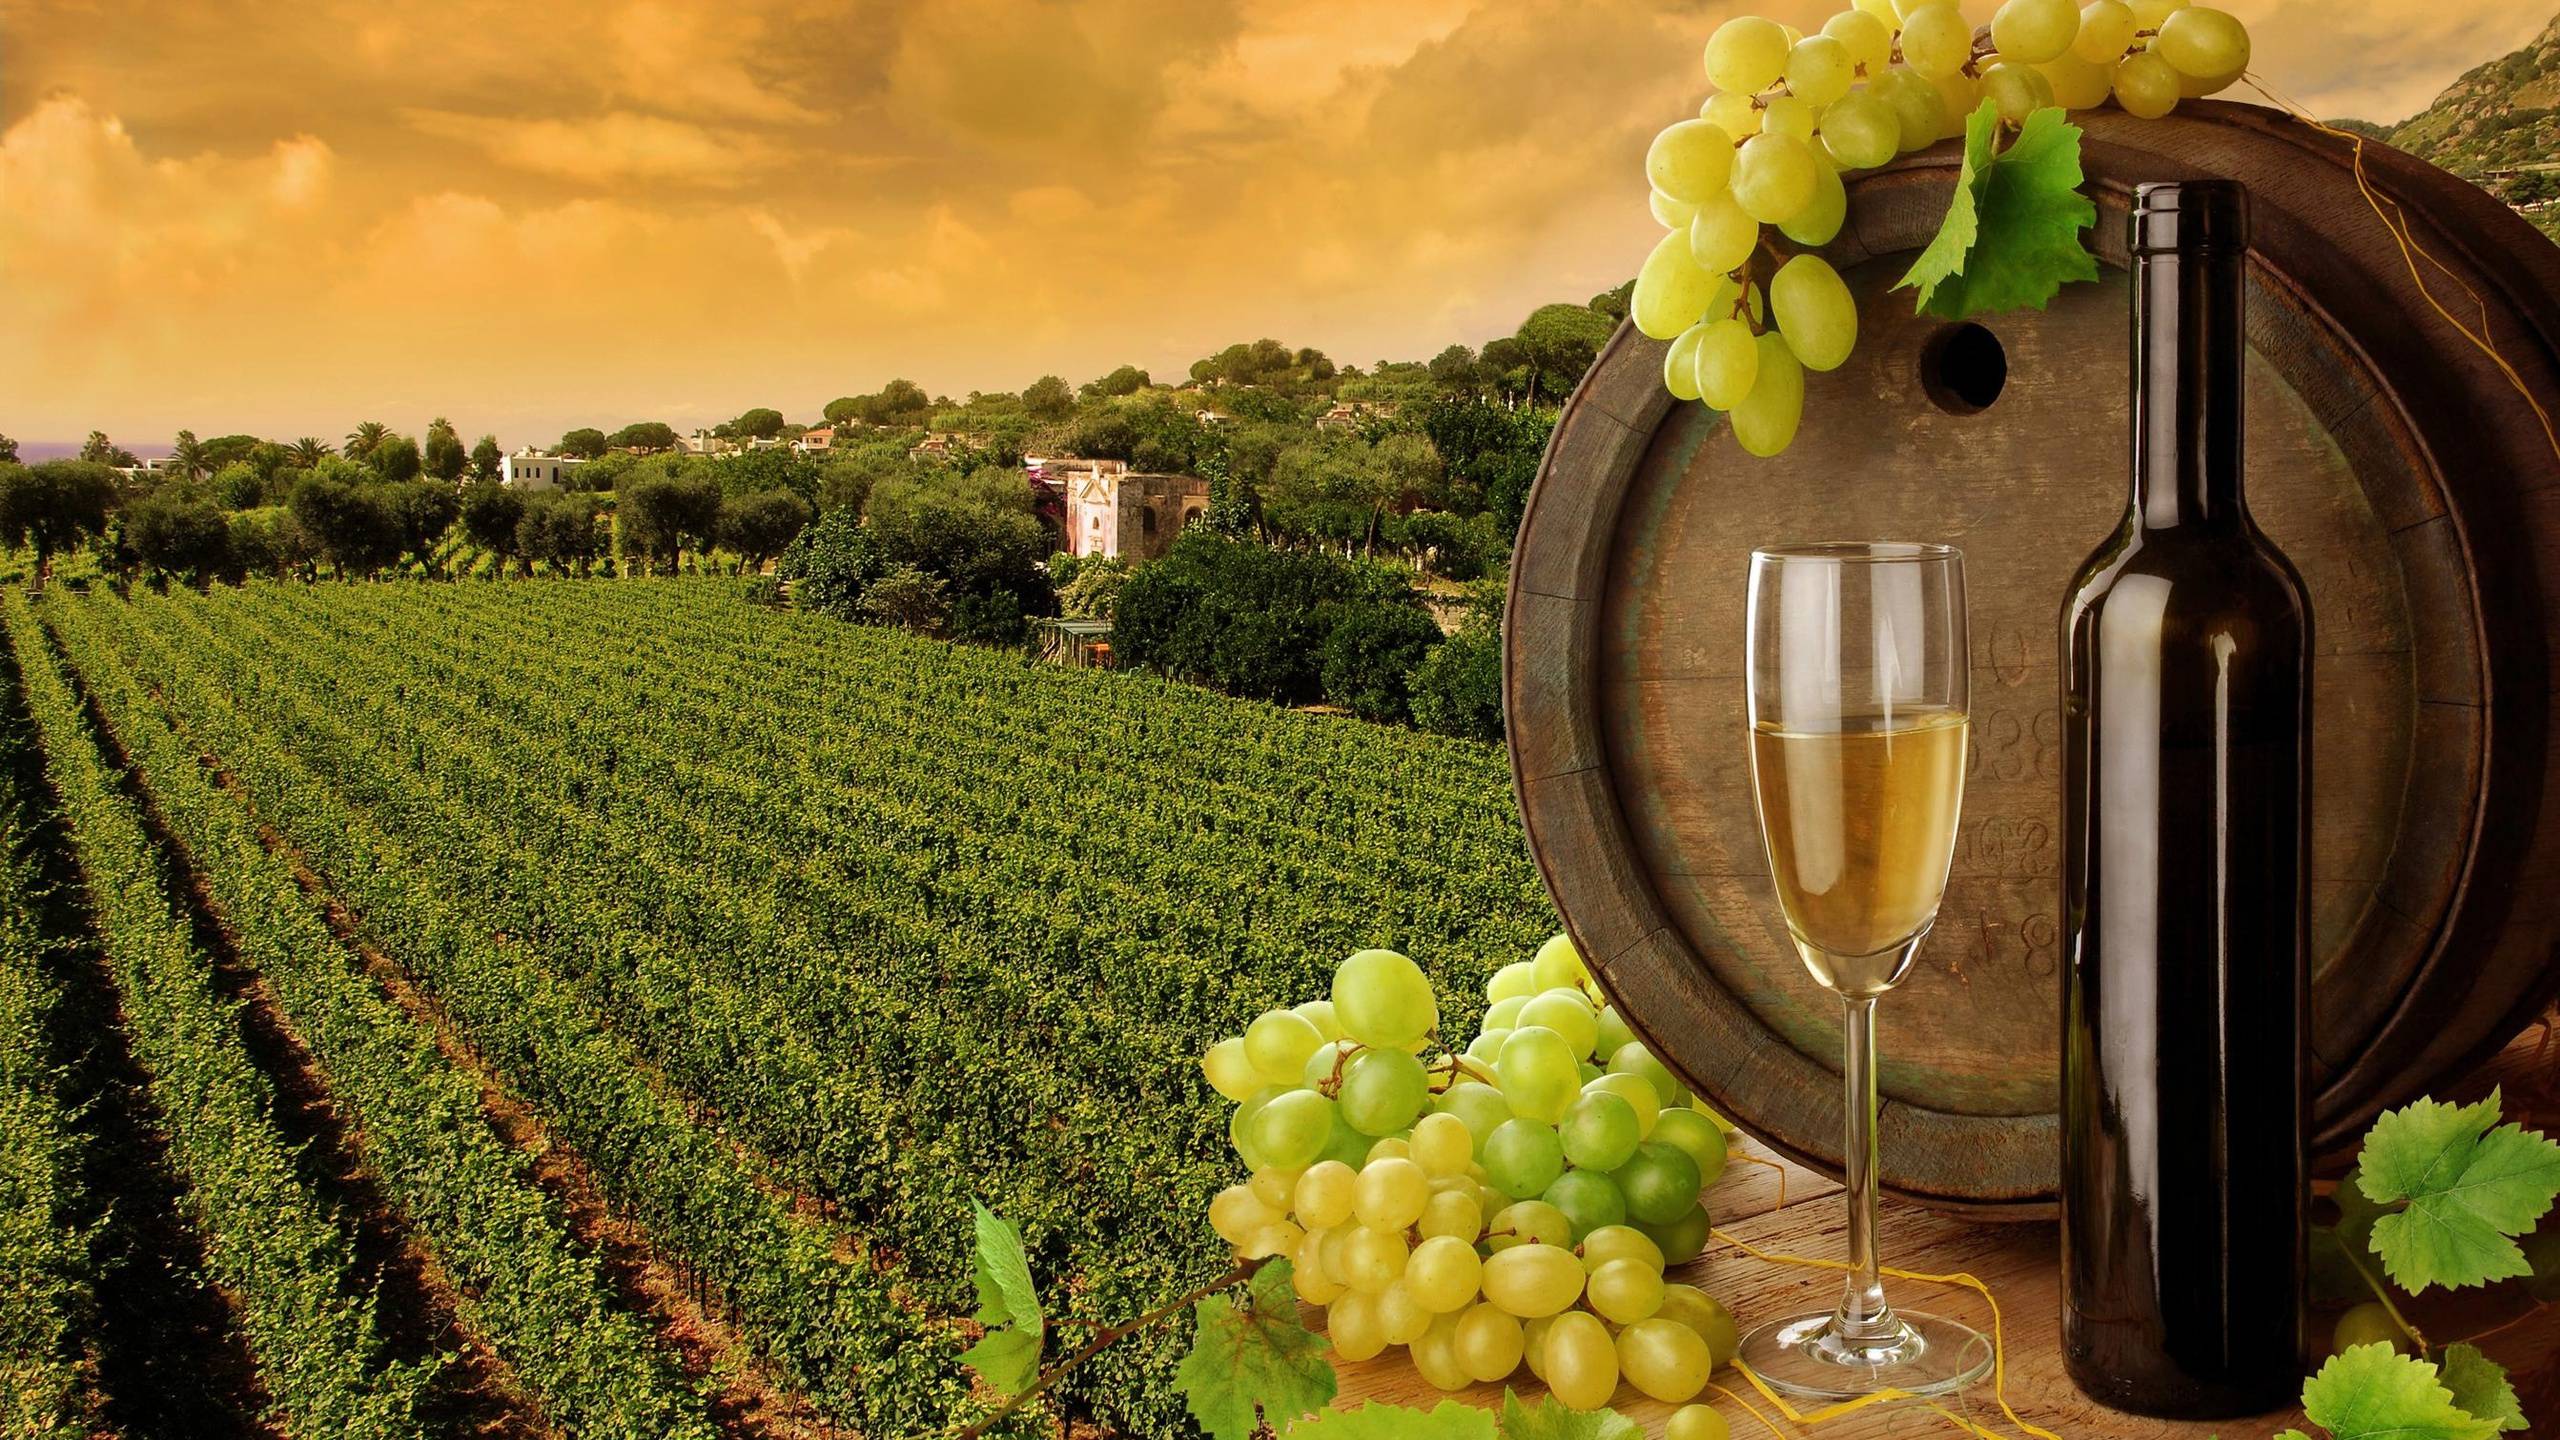 Vineyard Toscana 2560 x 1440 Locality Photography MIRIADNA